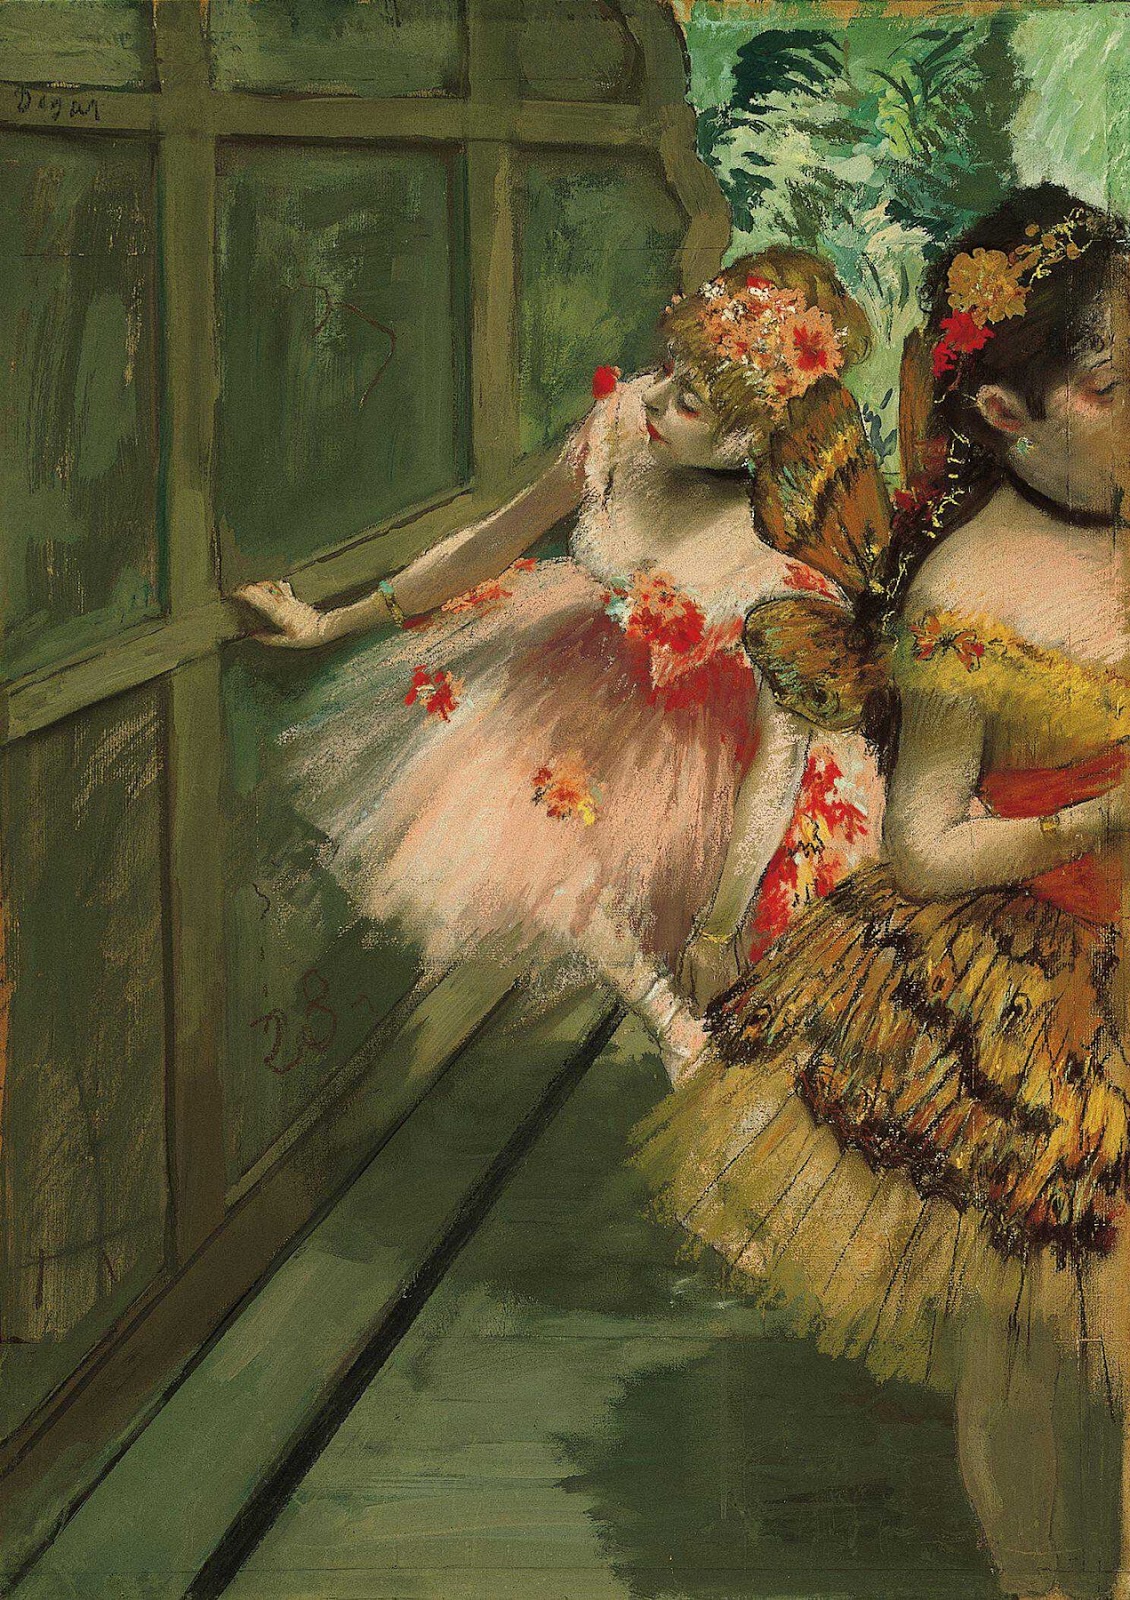 Dancers in the Wings by Edgar Degas - c. 1876-1878 - 69.2 x 50.2 cm Norton Simon Museum